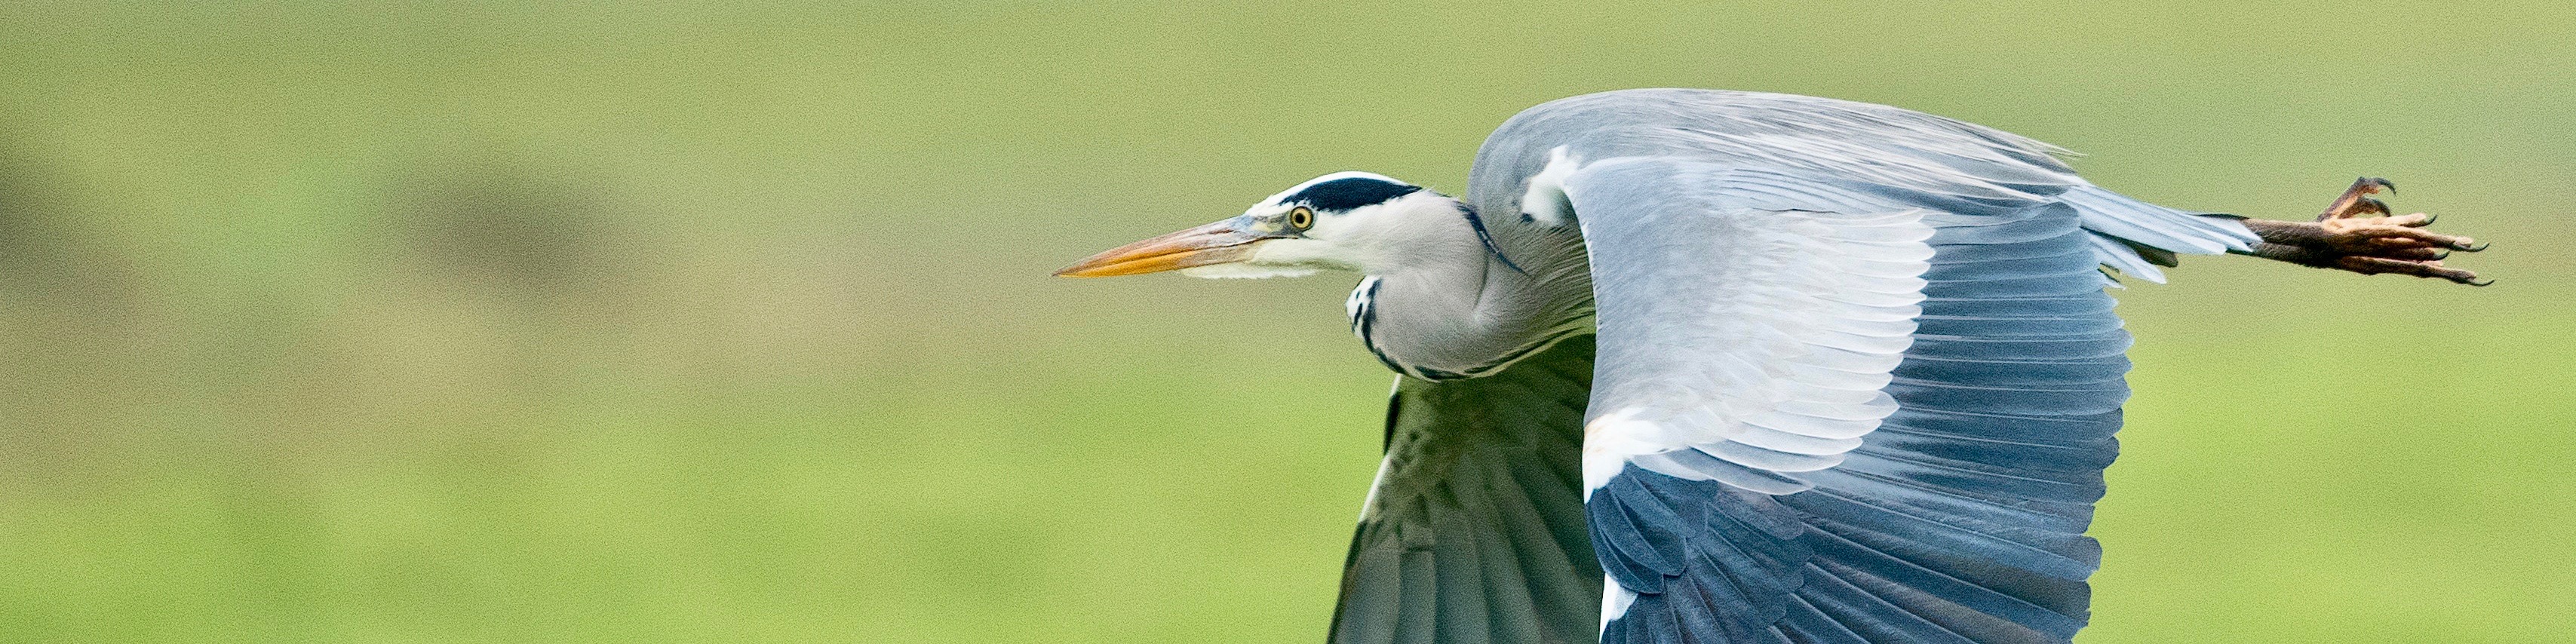 a heron